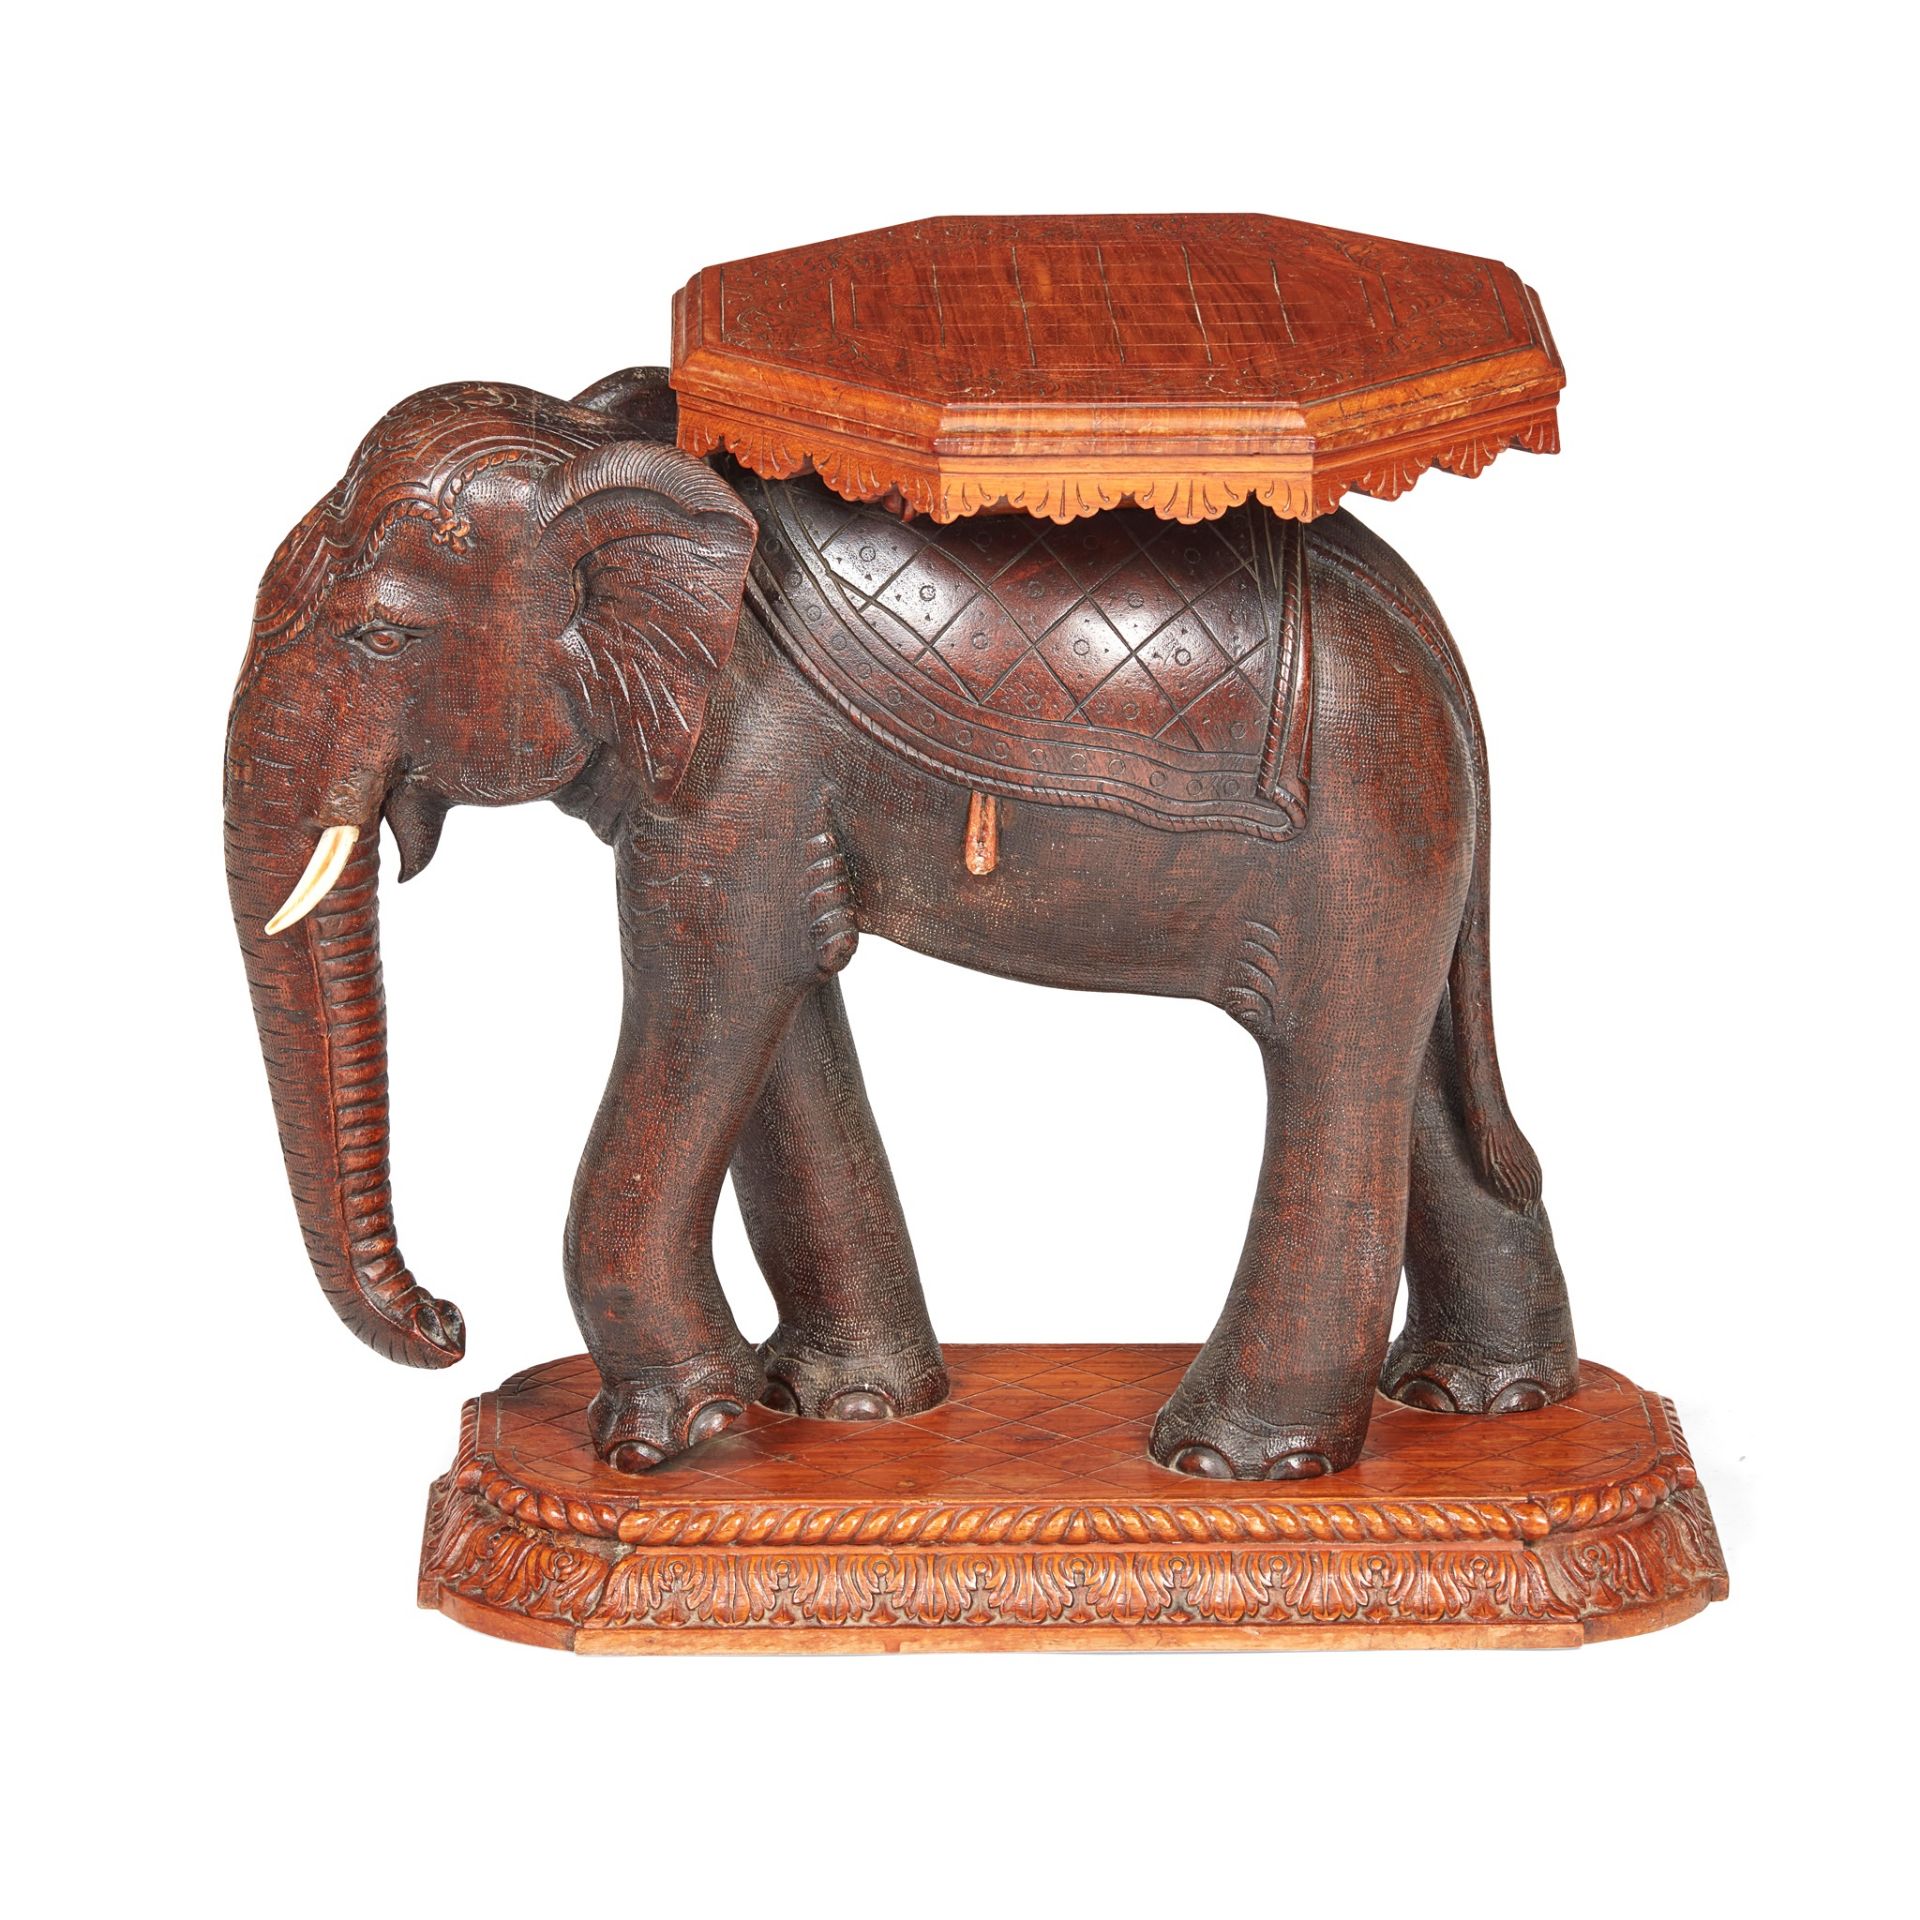 Y INDIAN CARVED HARDWOOD ELEPHANT STOOL 19TH CENTURY